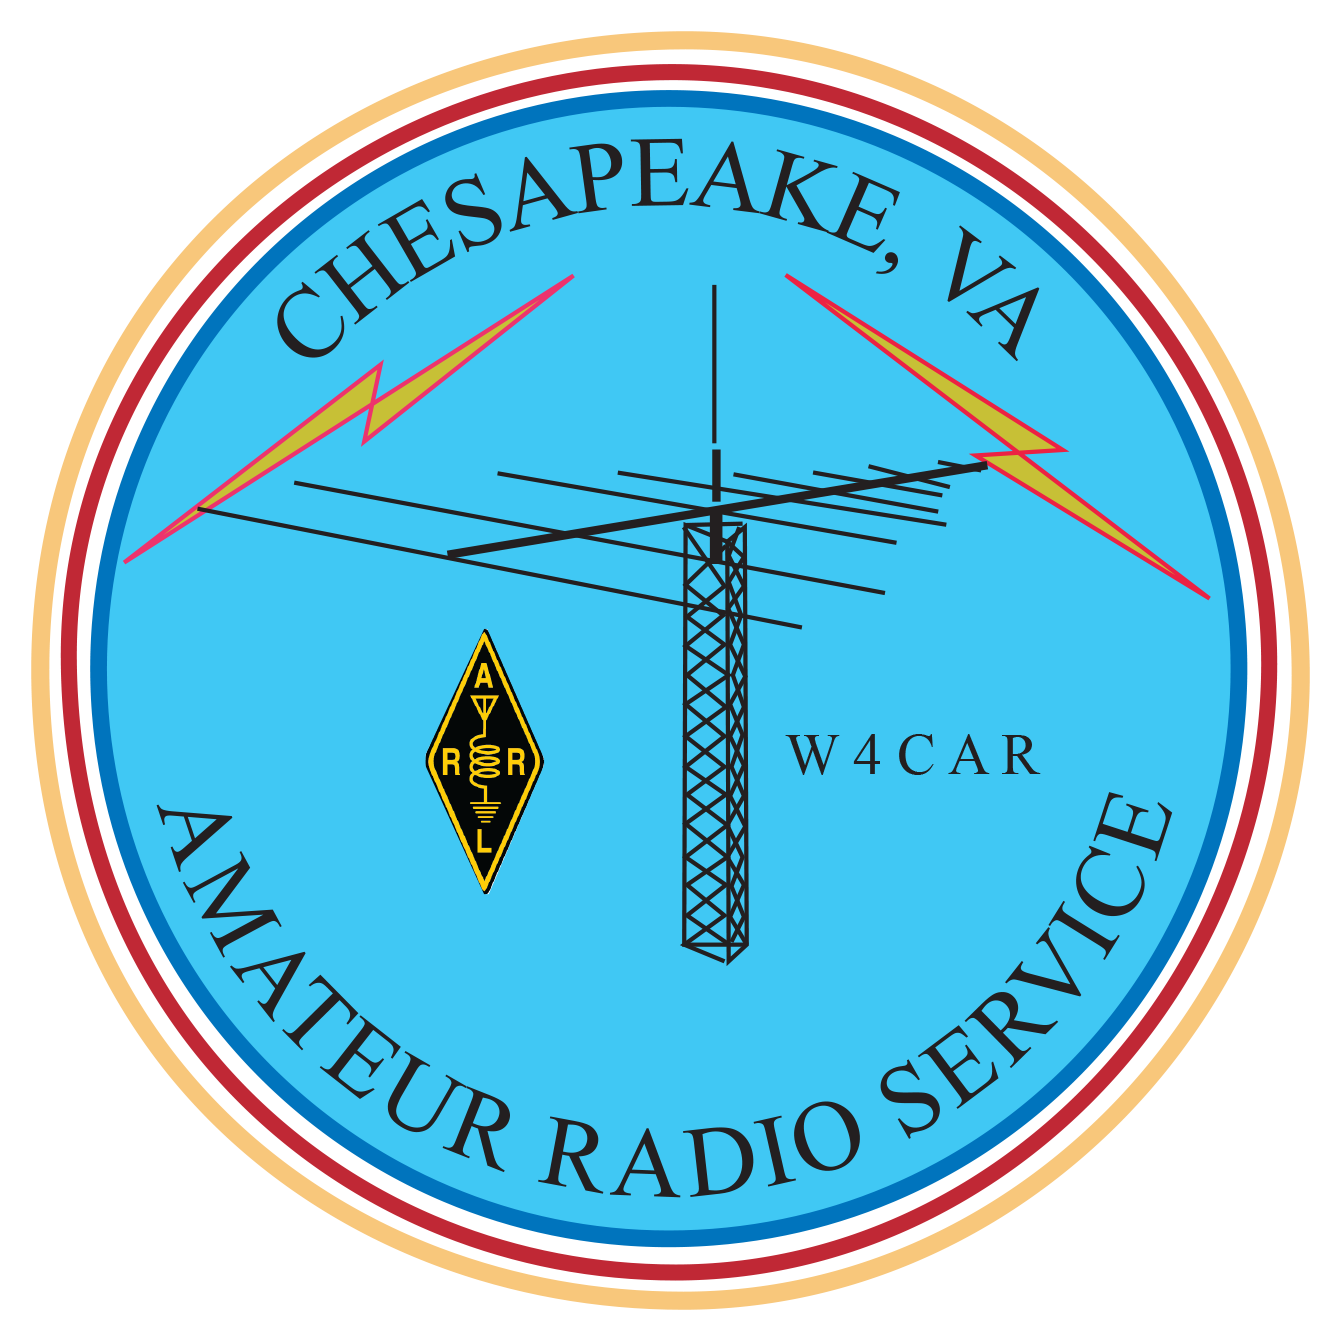 Chesapeake Amateur Radio Service